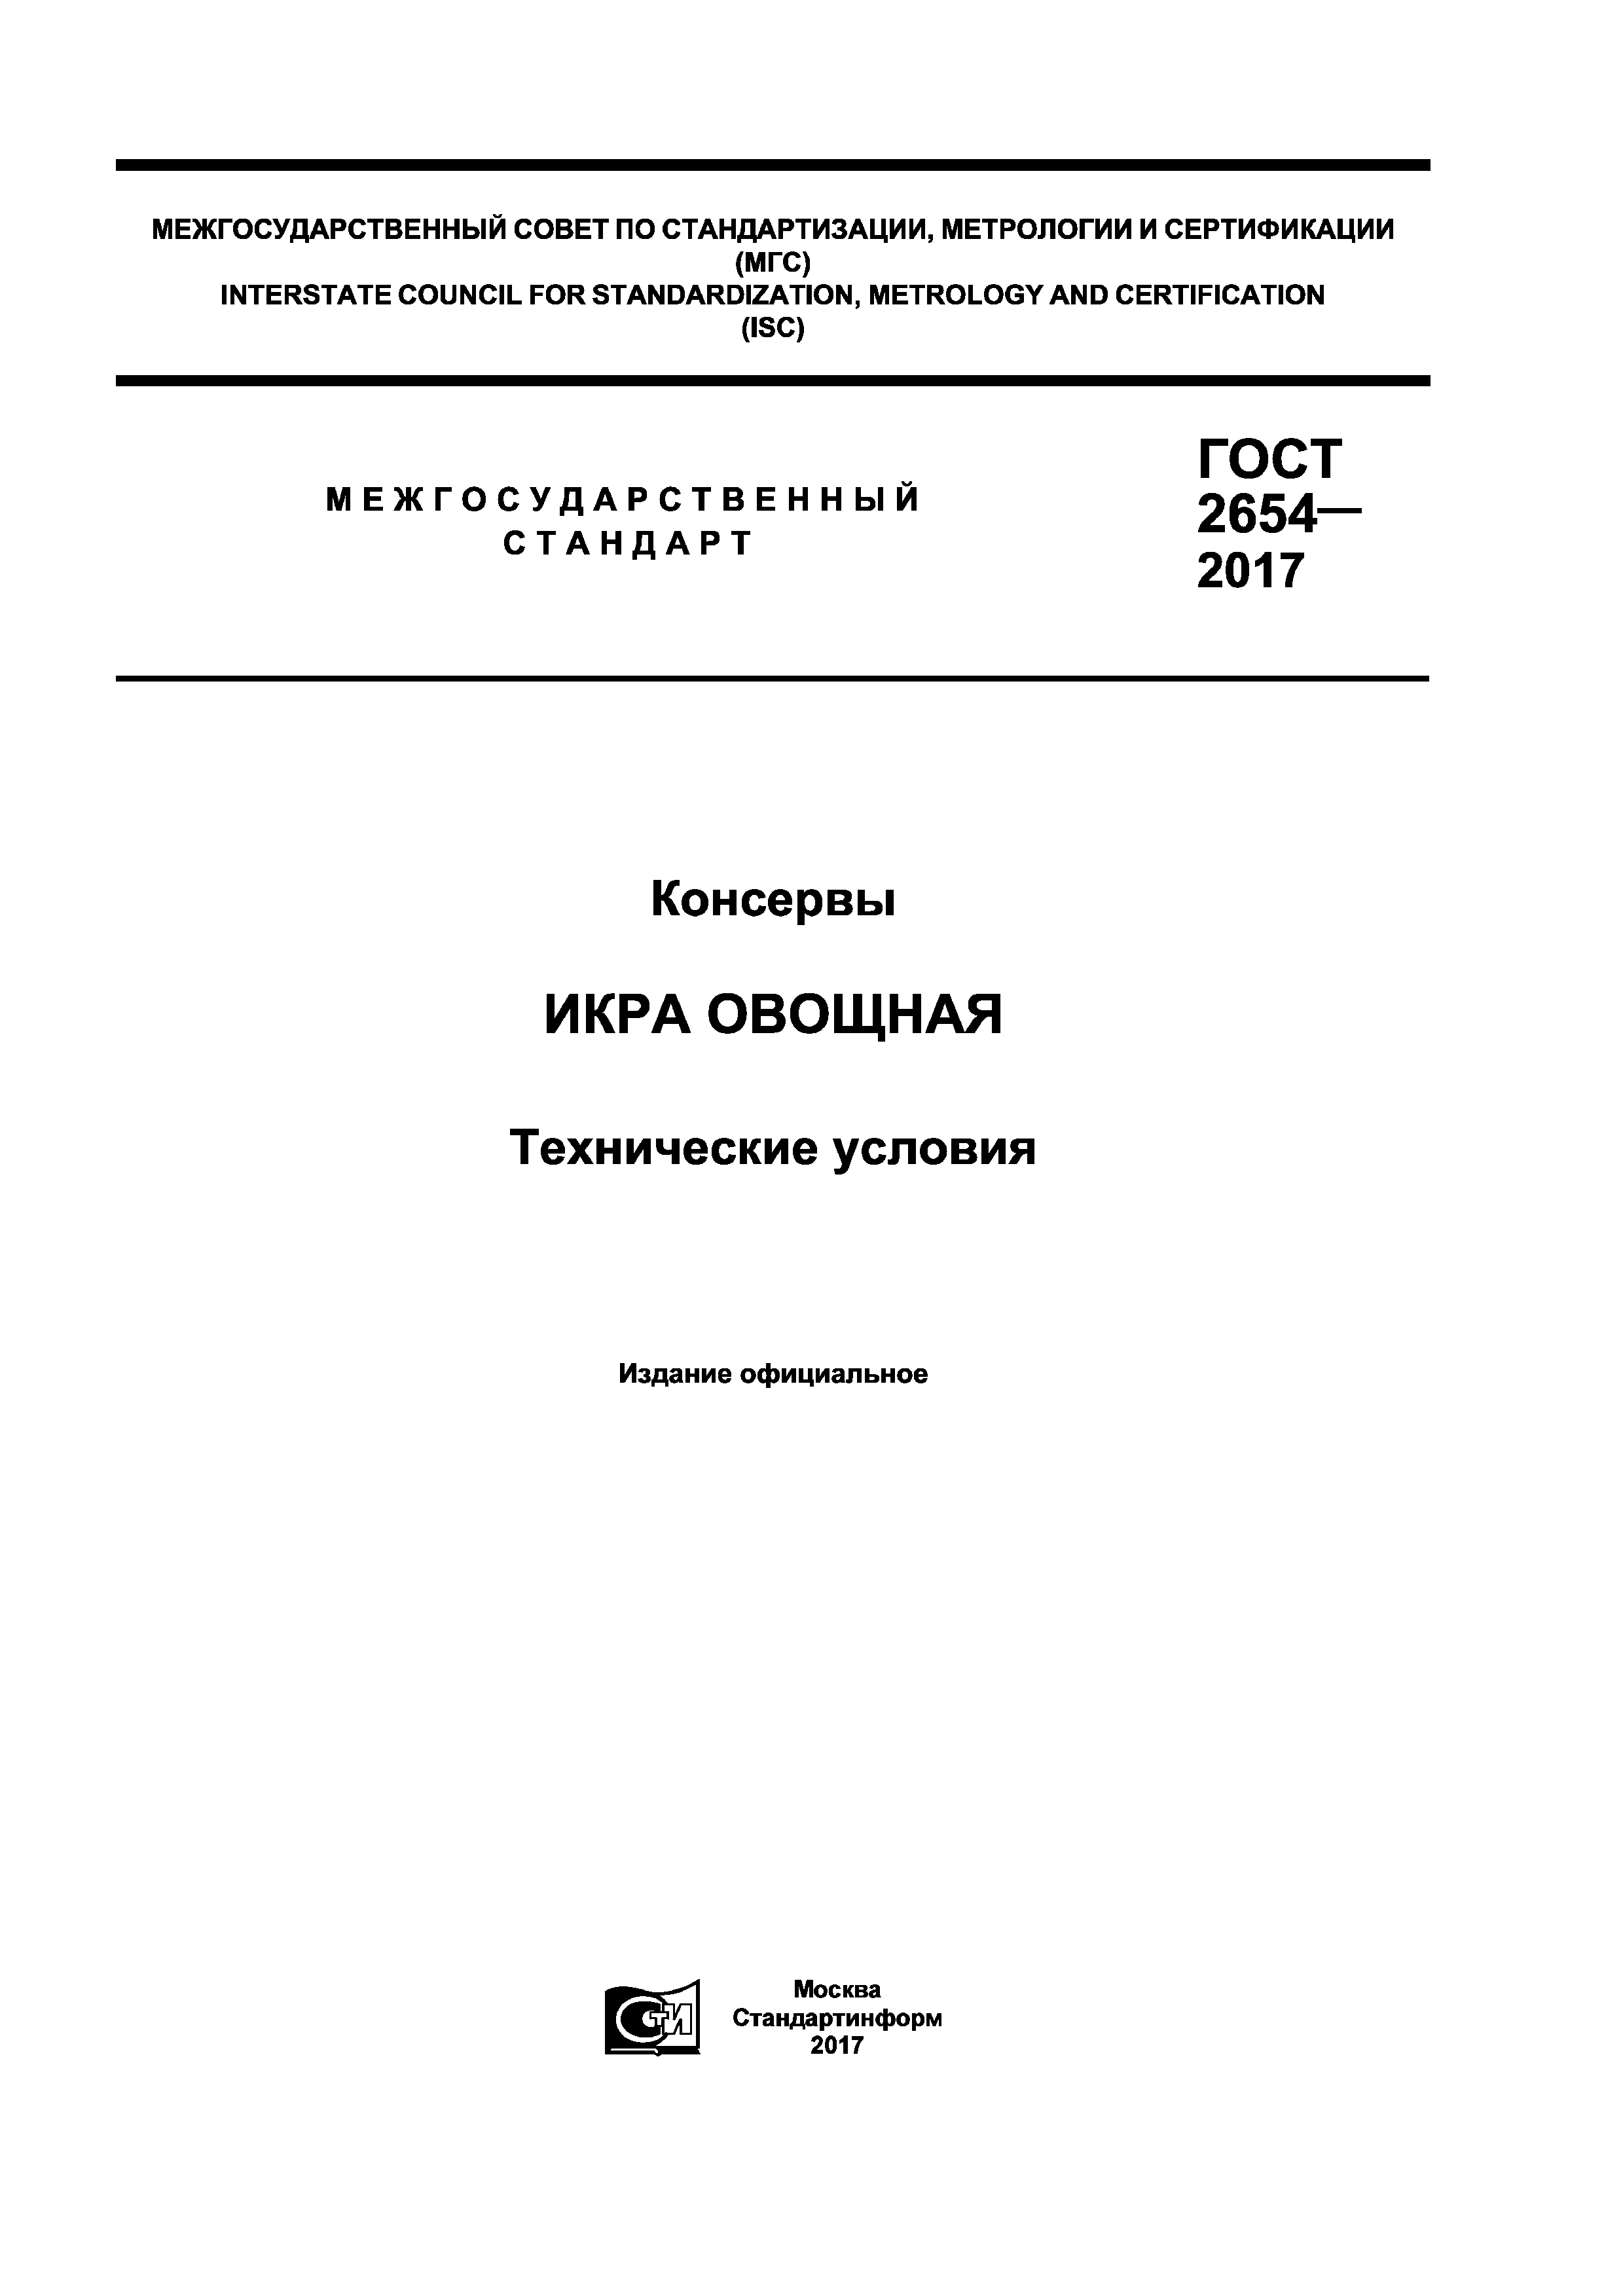 ГОСТ 2654-2017